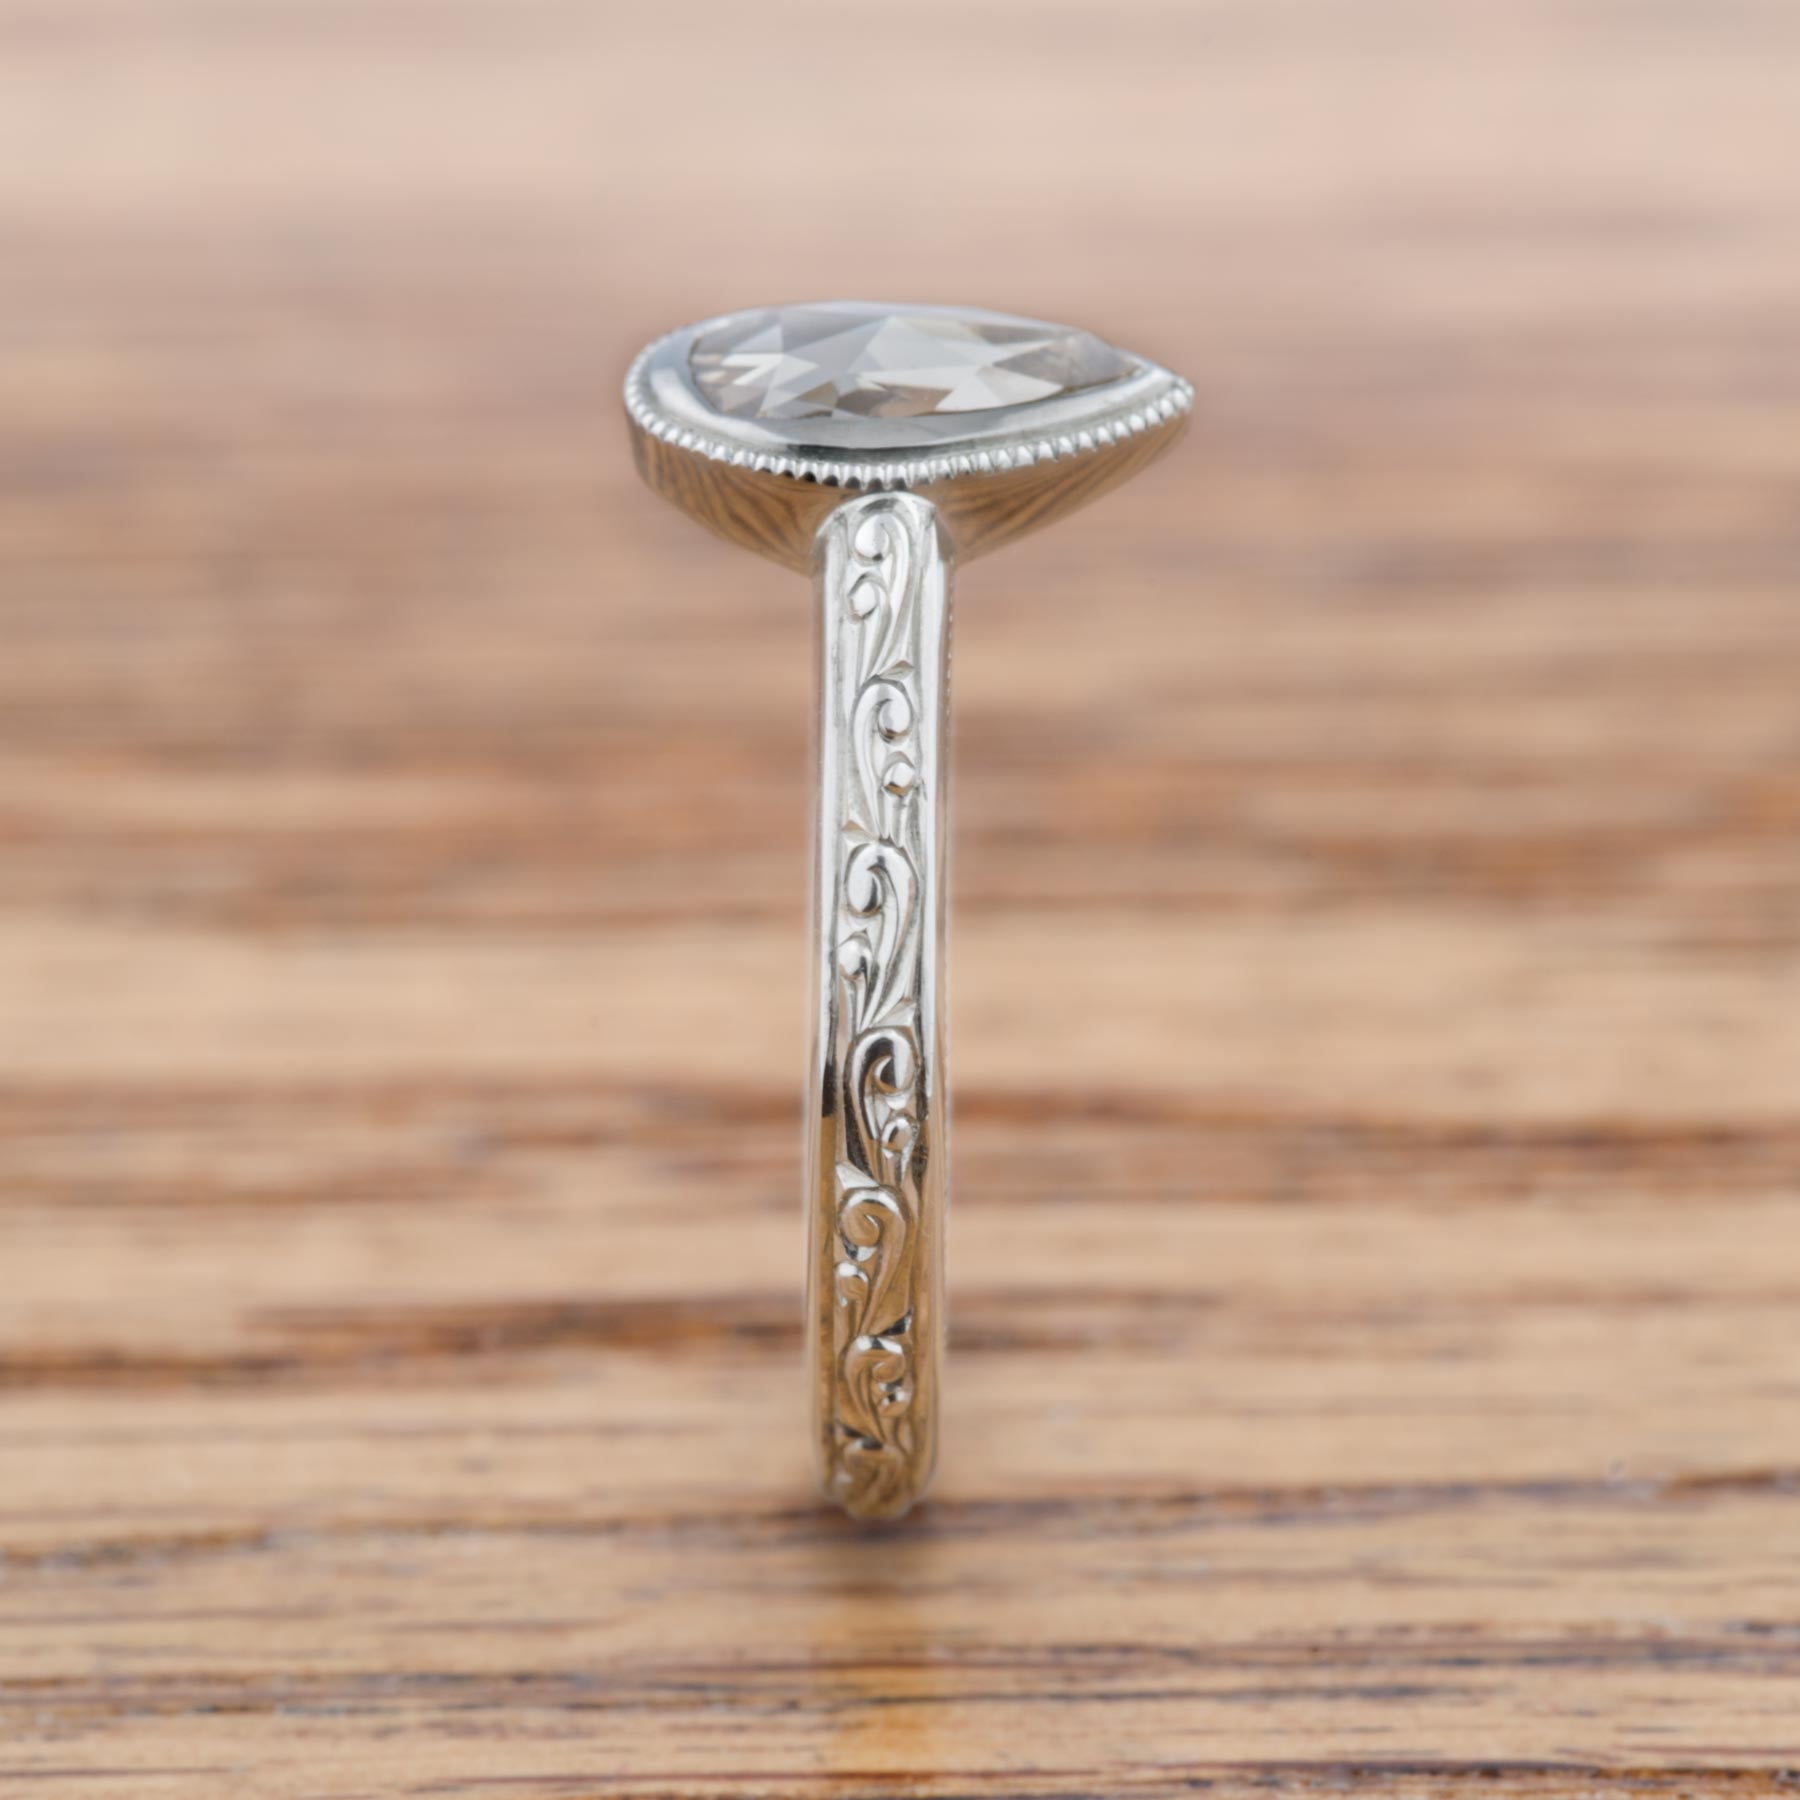 Bartlette Diamond Engagement Ring - Era Design Vancouver